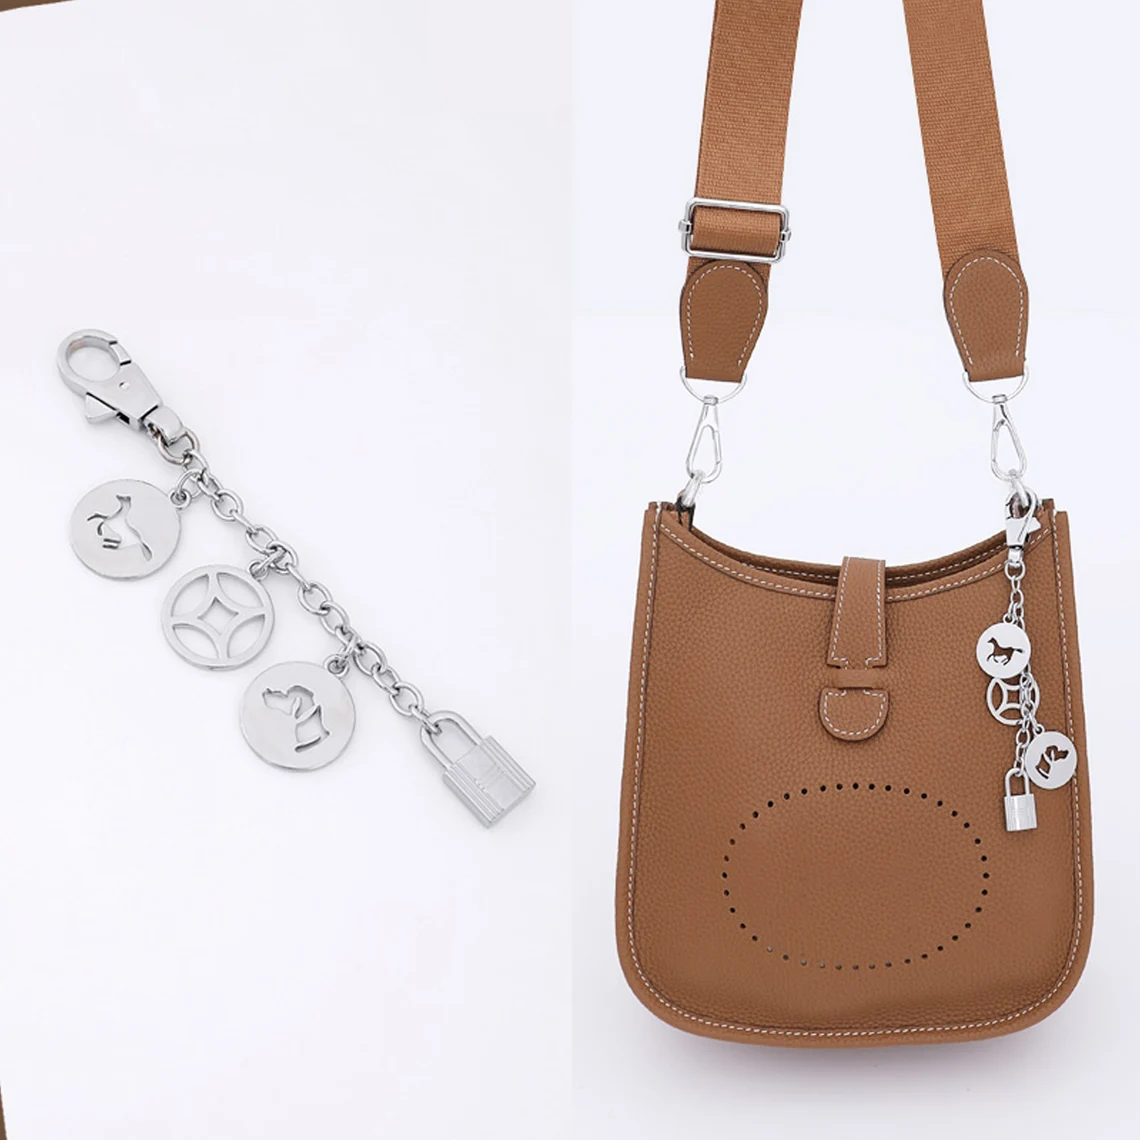 New Design The Chain strap for Evelyne Bag,Strap pendant,Hand bag transformation